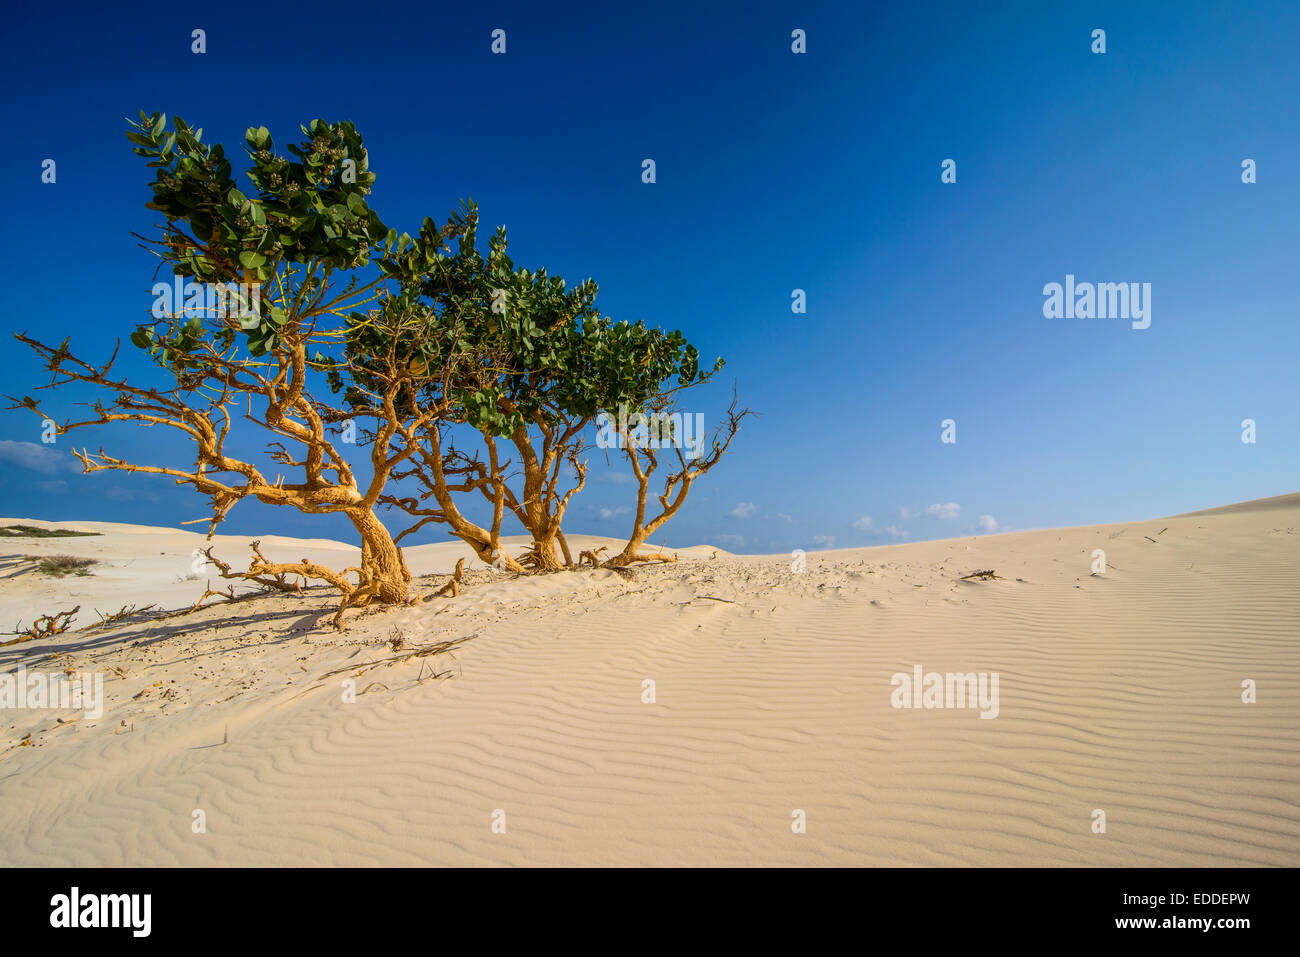 Shrubs growing in the sand dunes, island of Socotra, Yemen Stock Photo